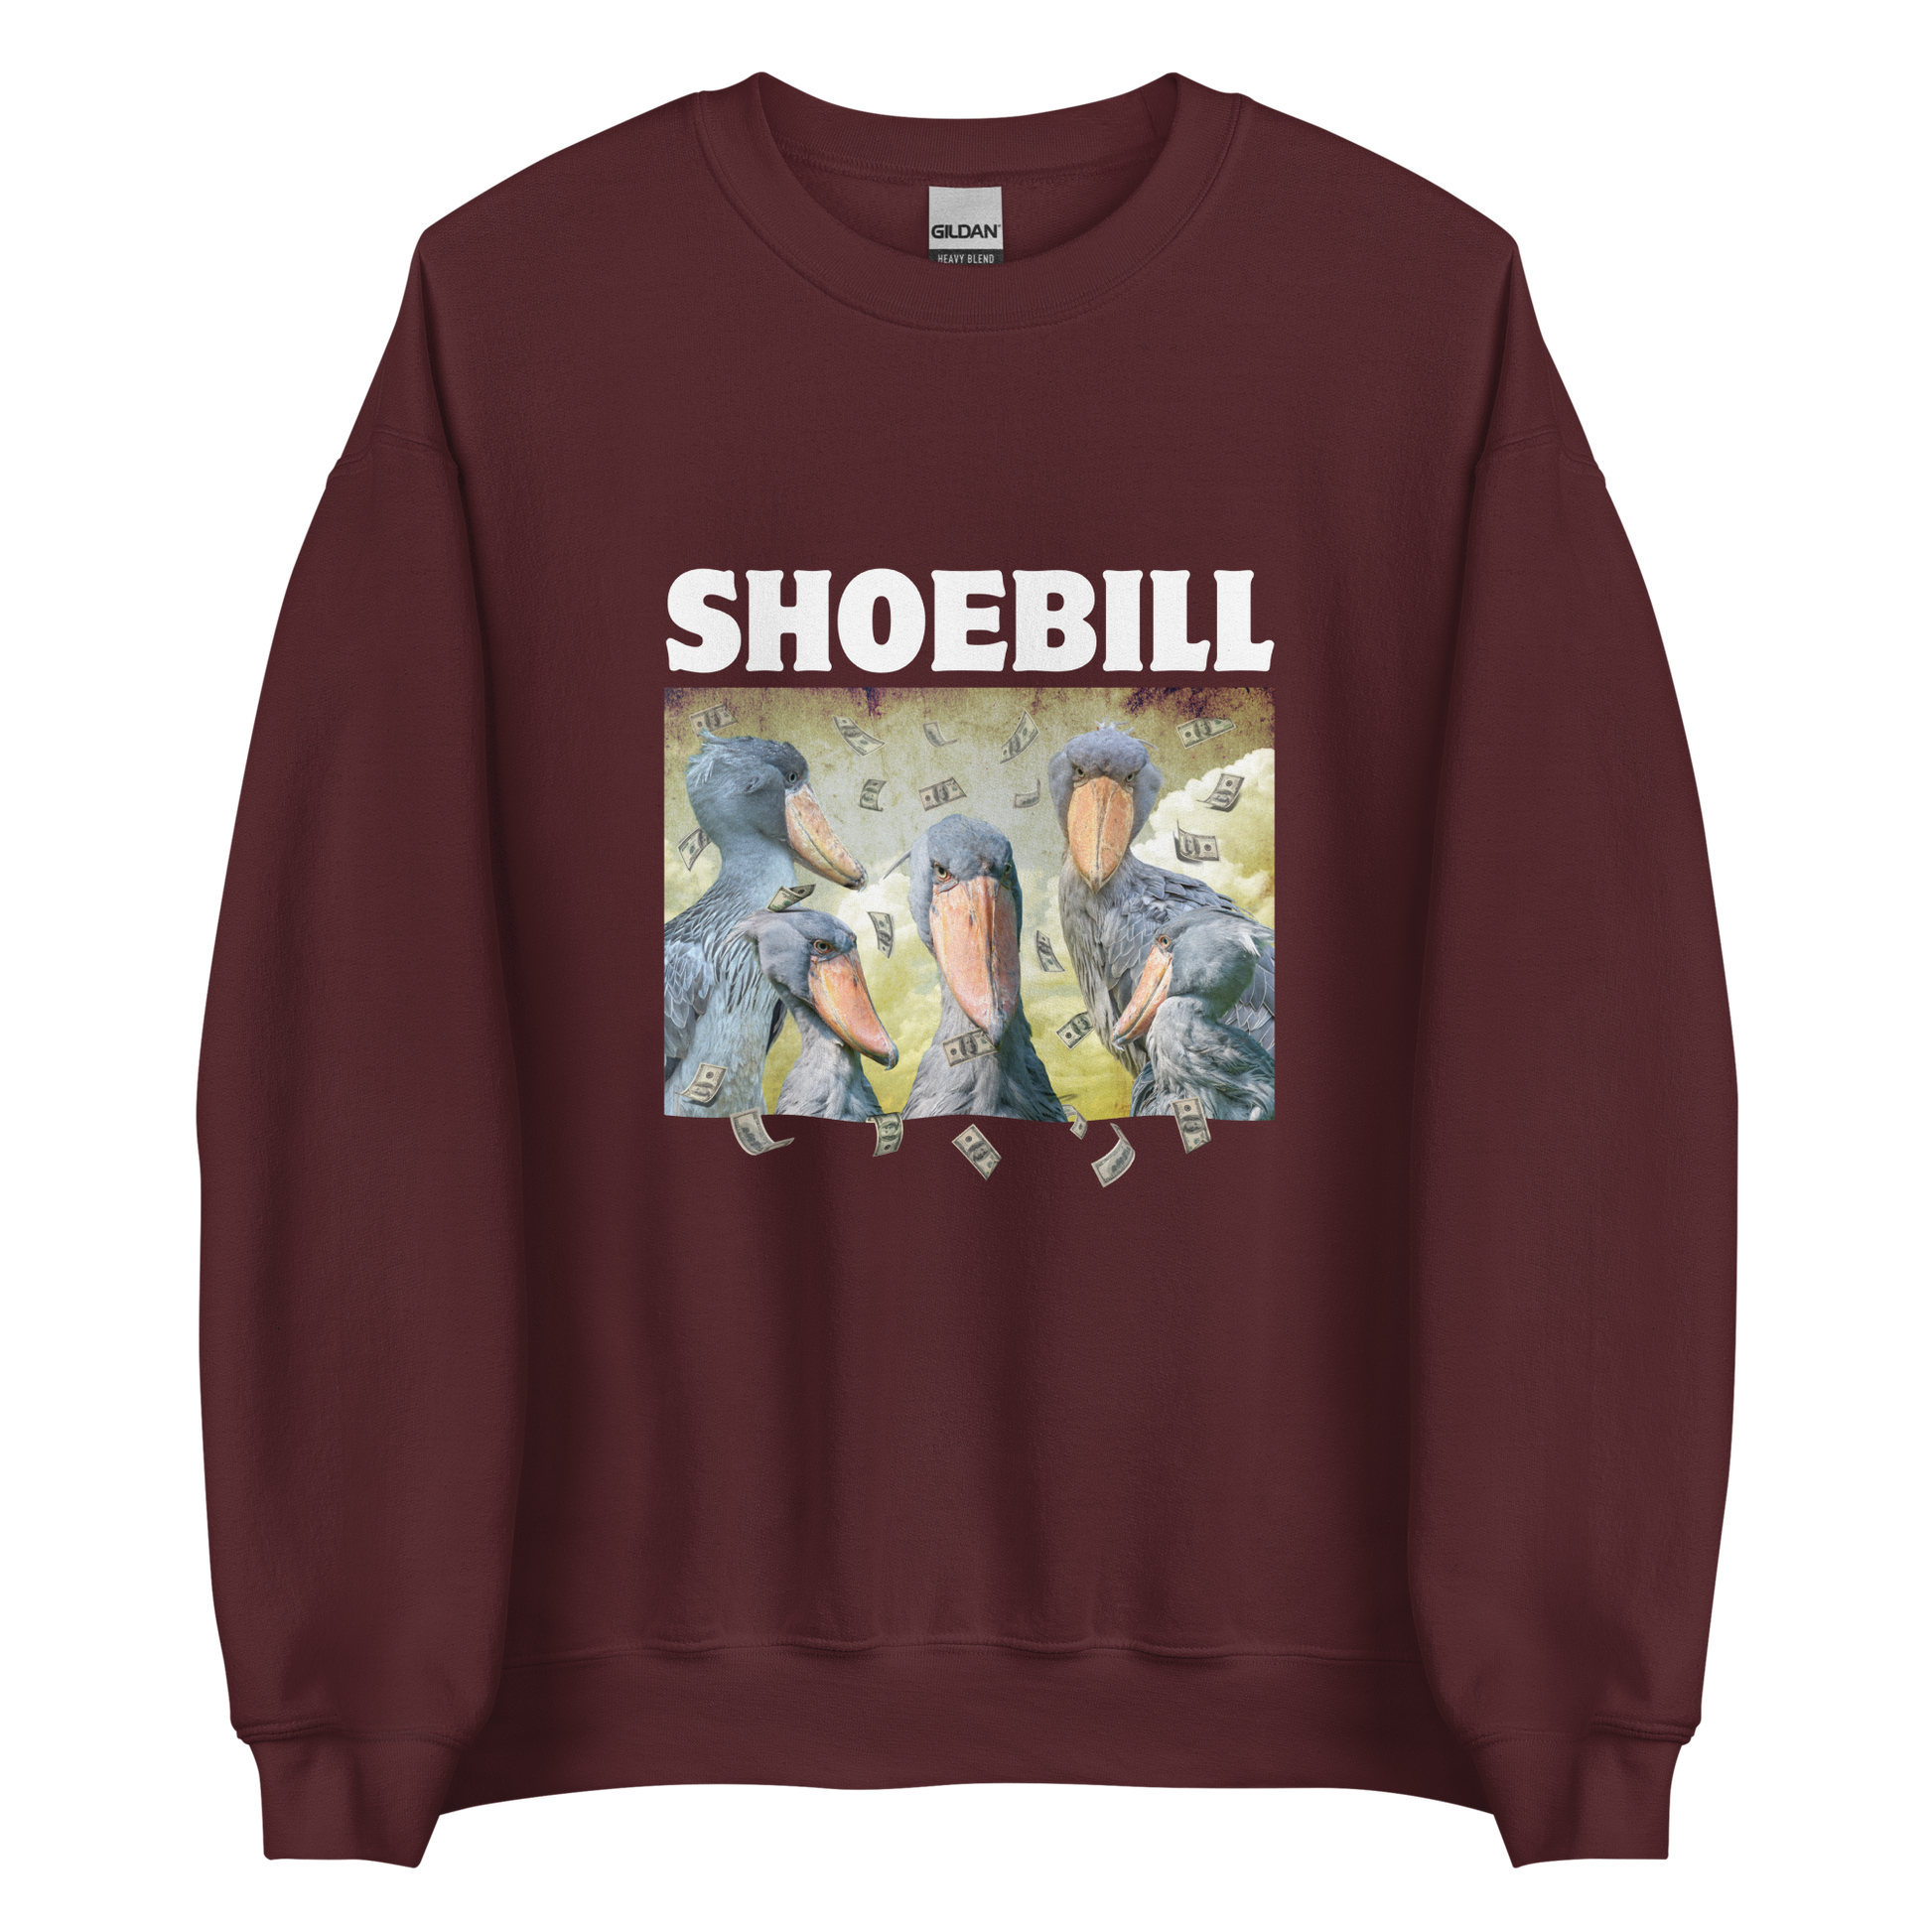 Maroon Shoebill Sweatshirt featuring a cool Shoebill graphic on the chest - Artsy/Funny Graphic Shoebill Stork Sweatshirts - Boozy Fox